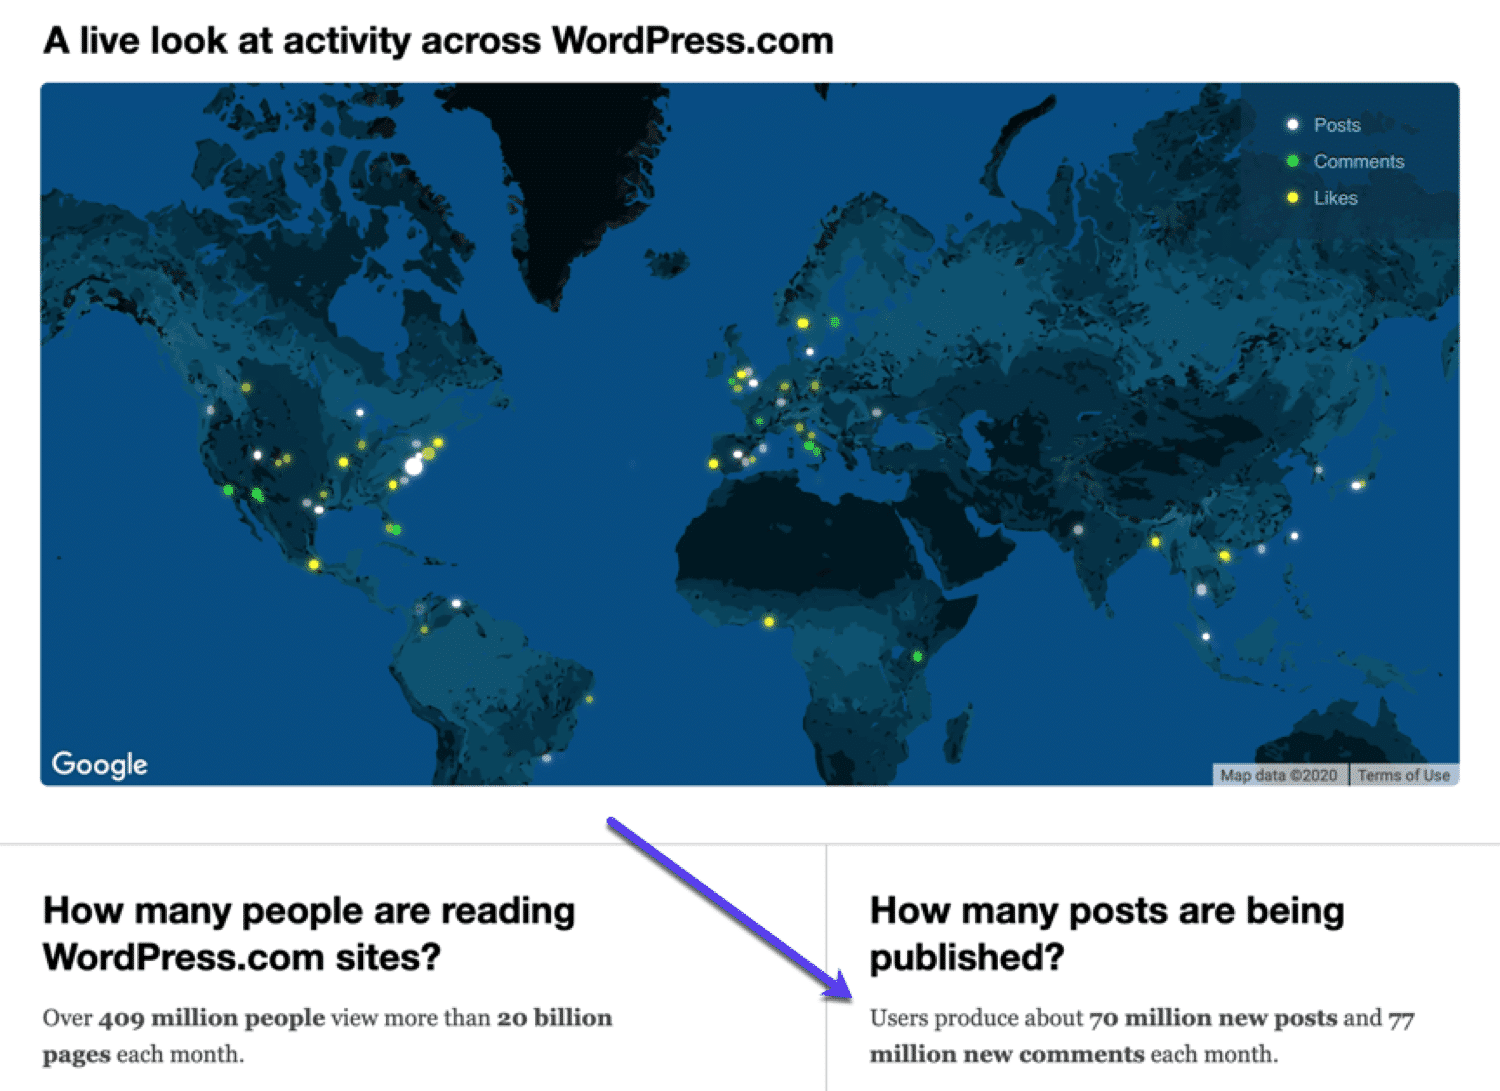 A WordPress map showing usage across the globe.